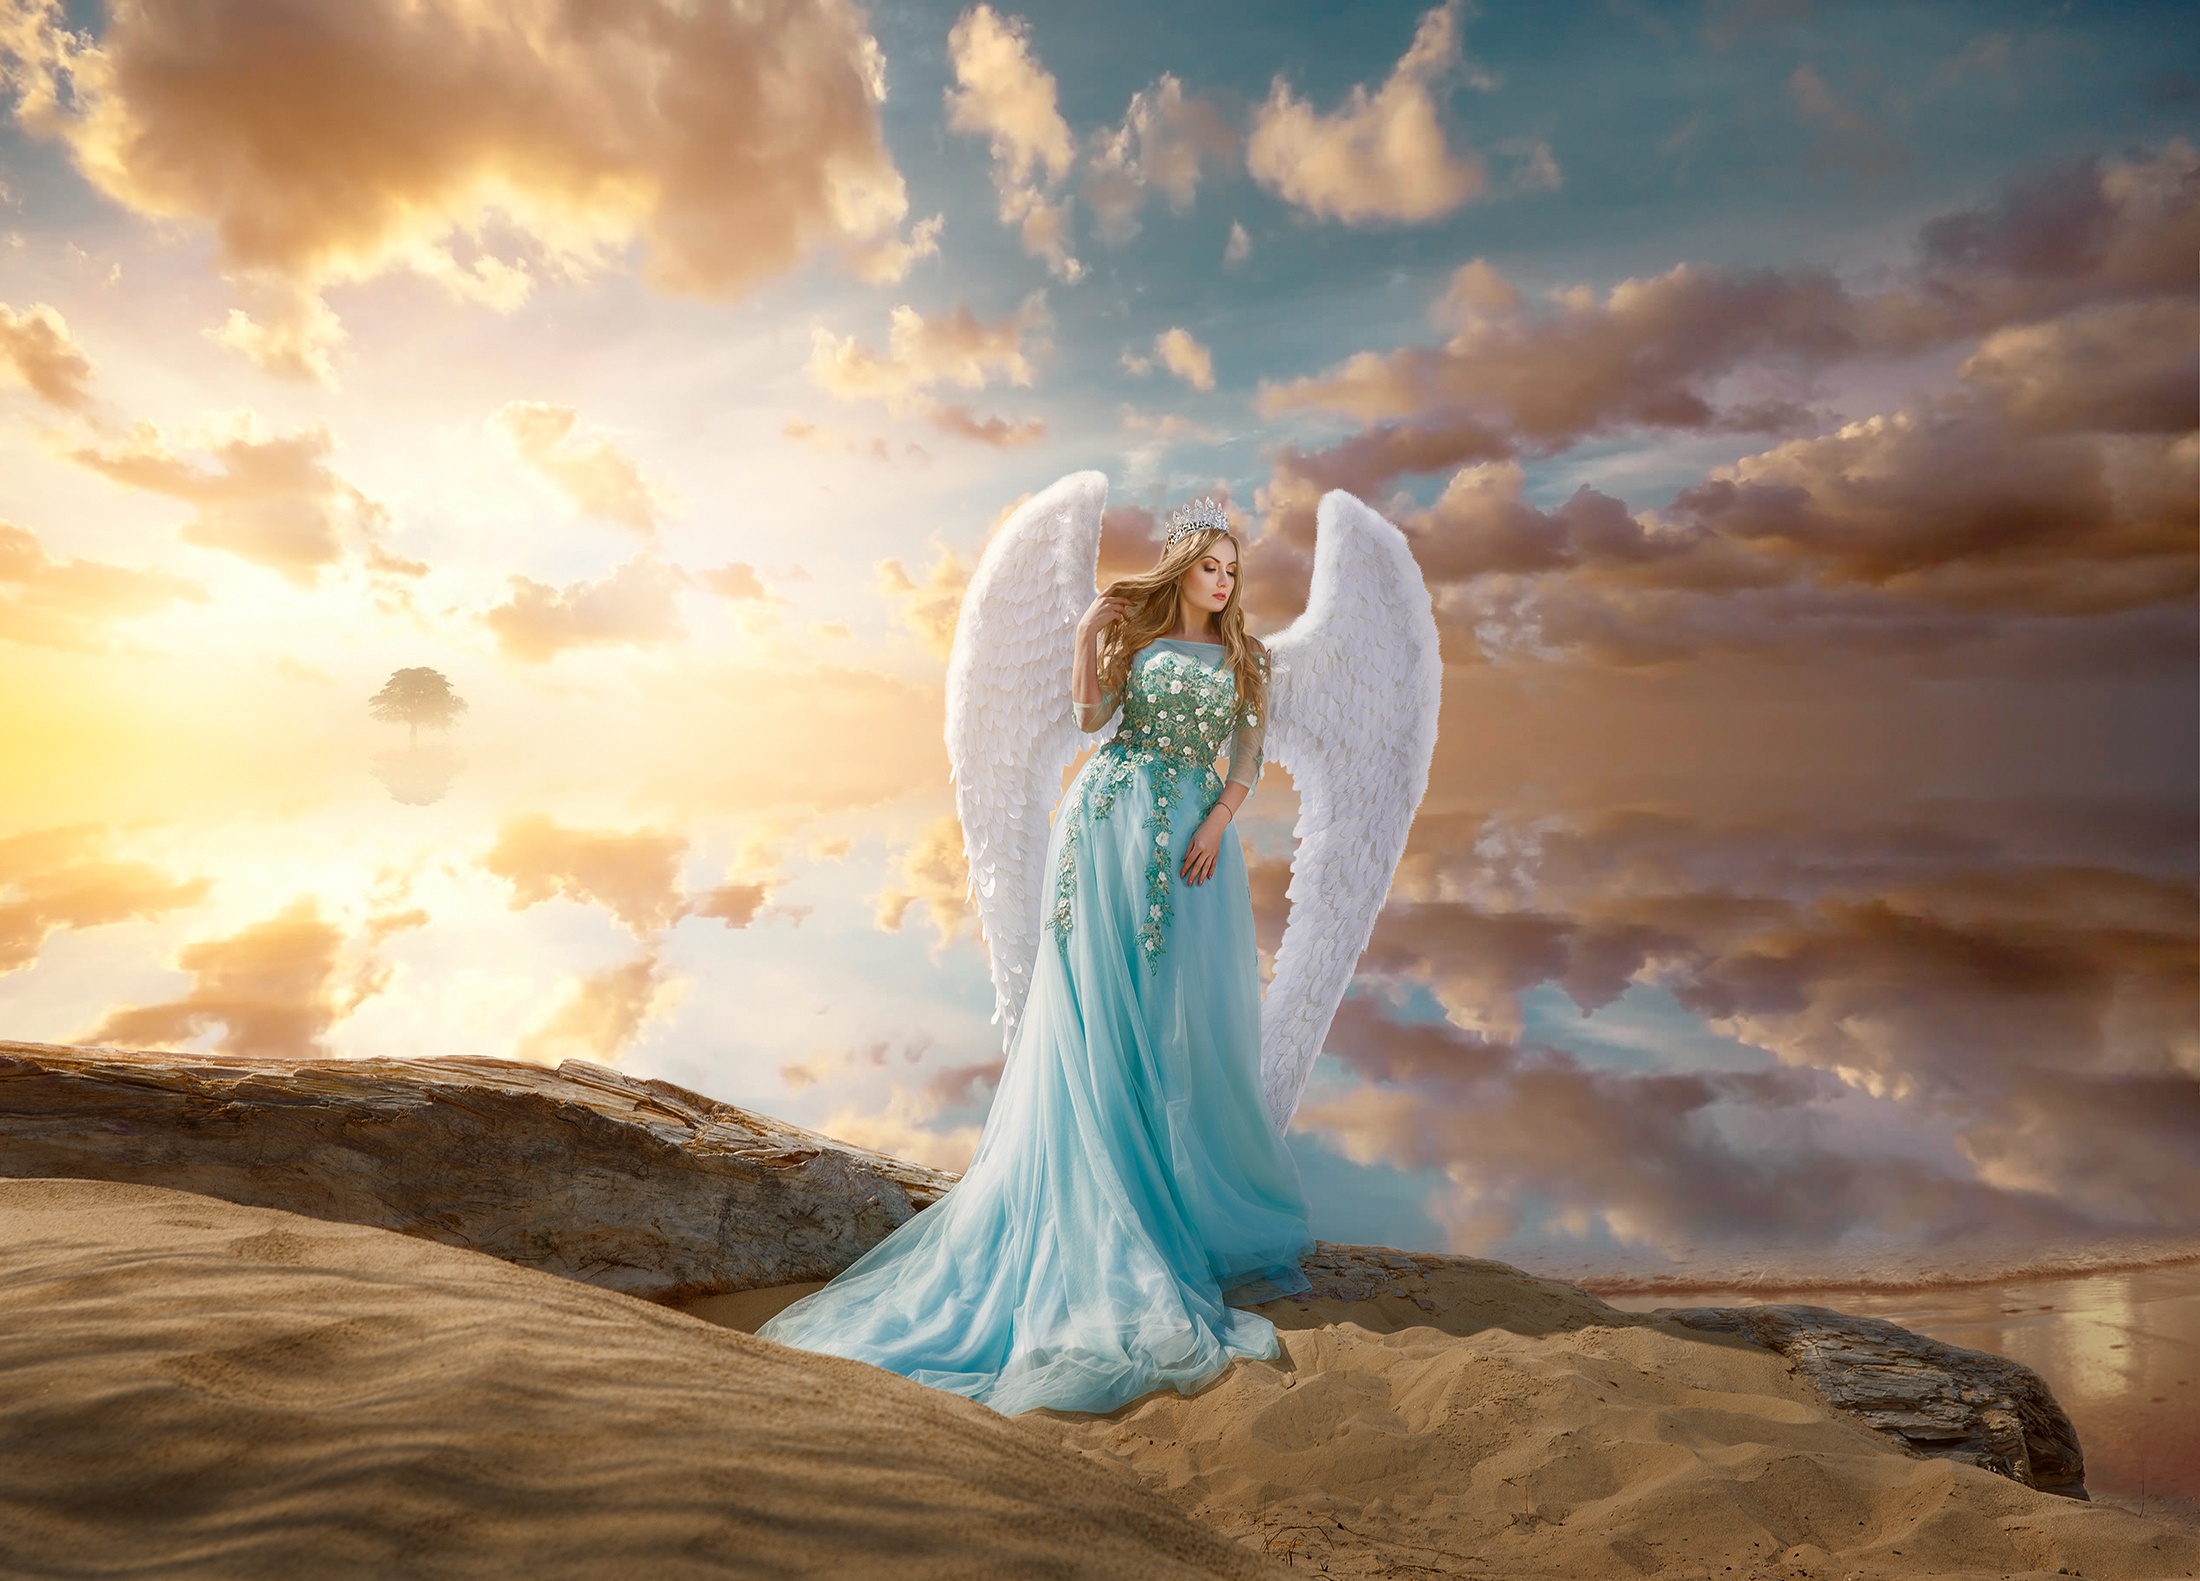 People 2200x1581 angel wings sky dress women model standing sunlight nature fantasy girl blonde crown blue dress makeup